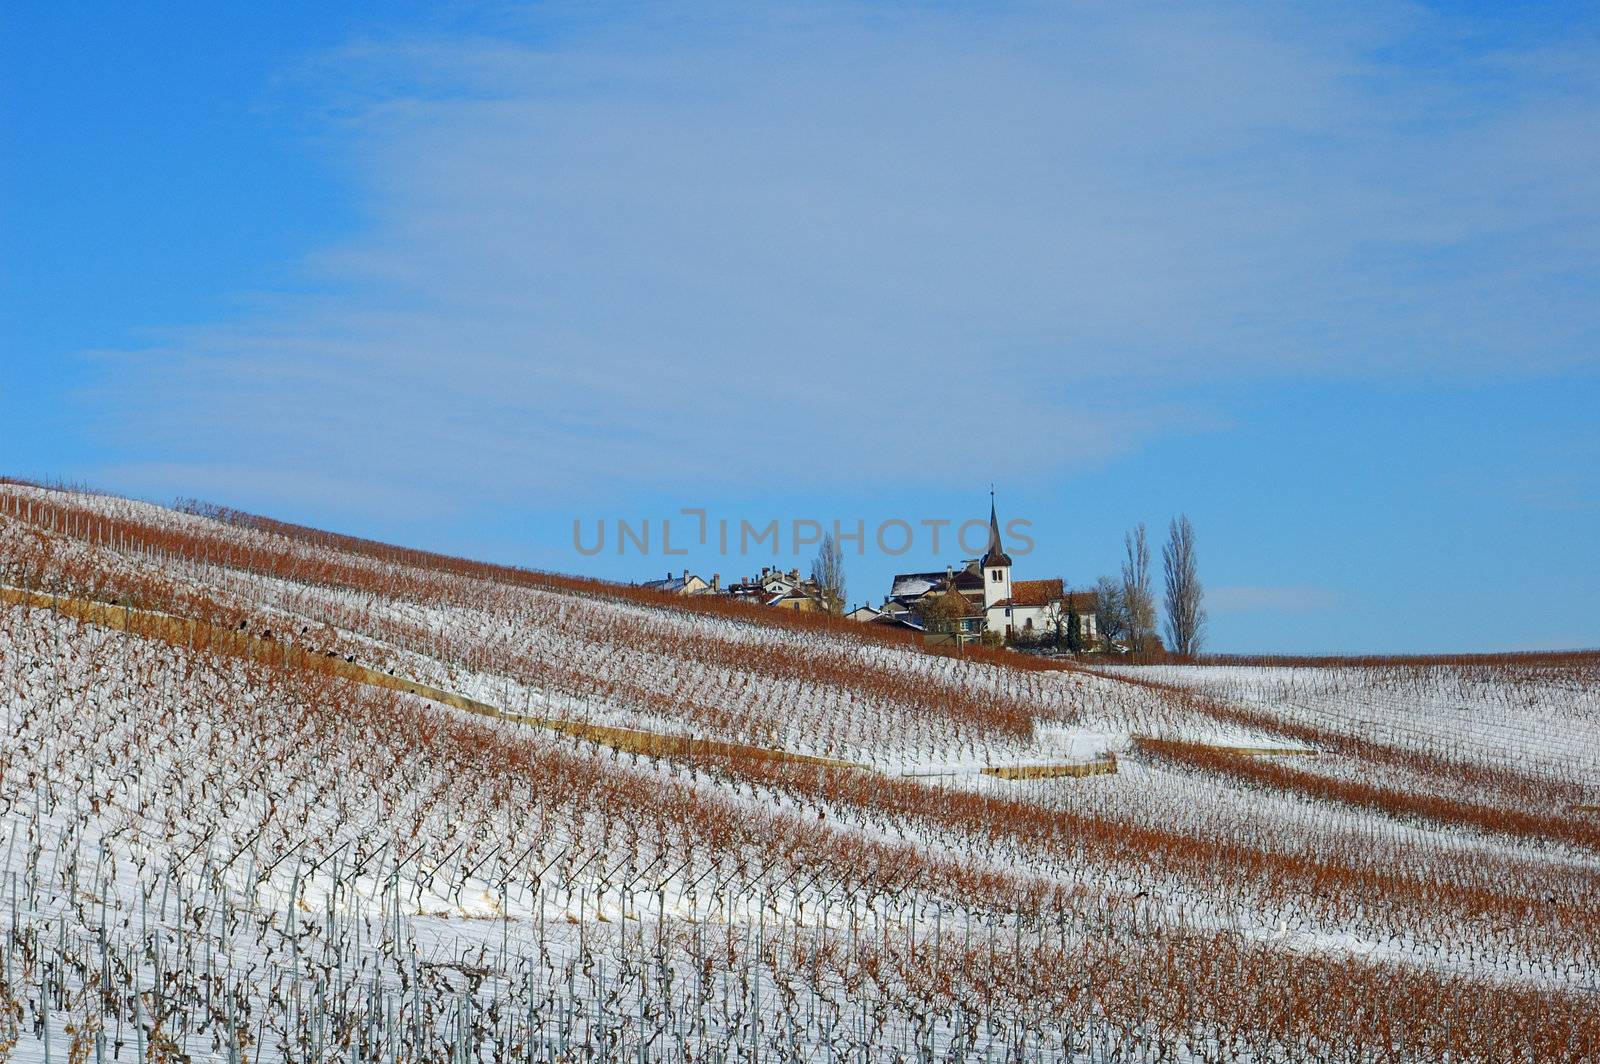 The vineyards around the village of Fechy, in Switzerland, under a light dusting of snow.